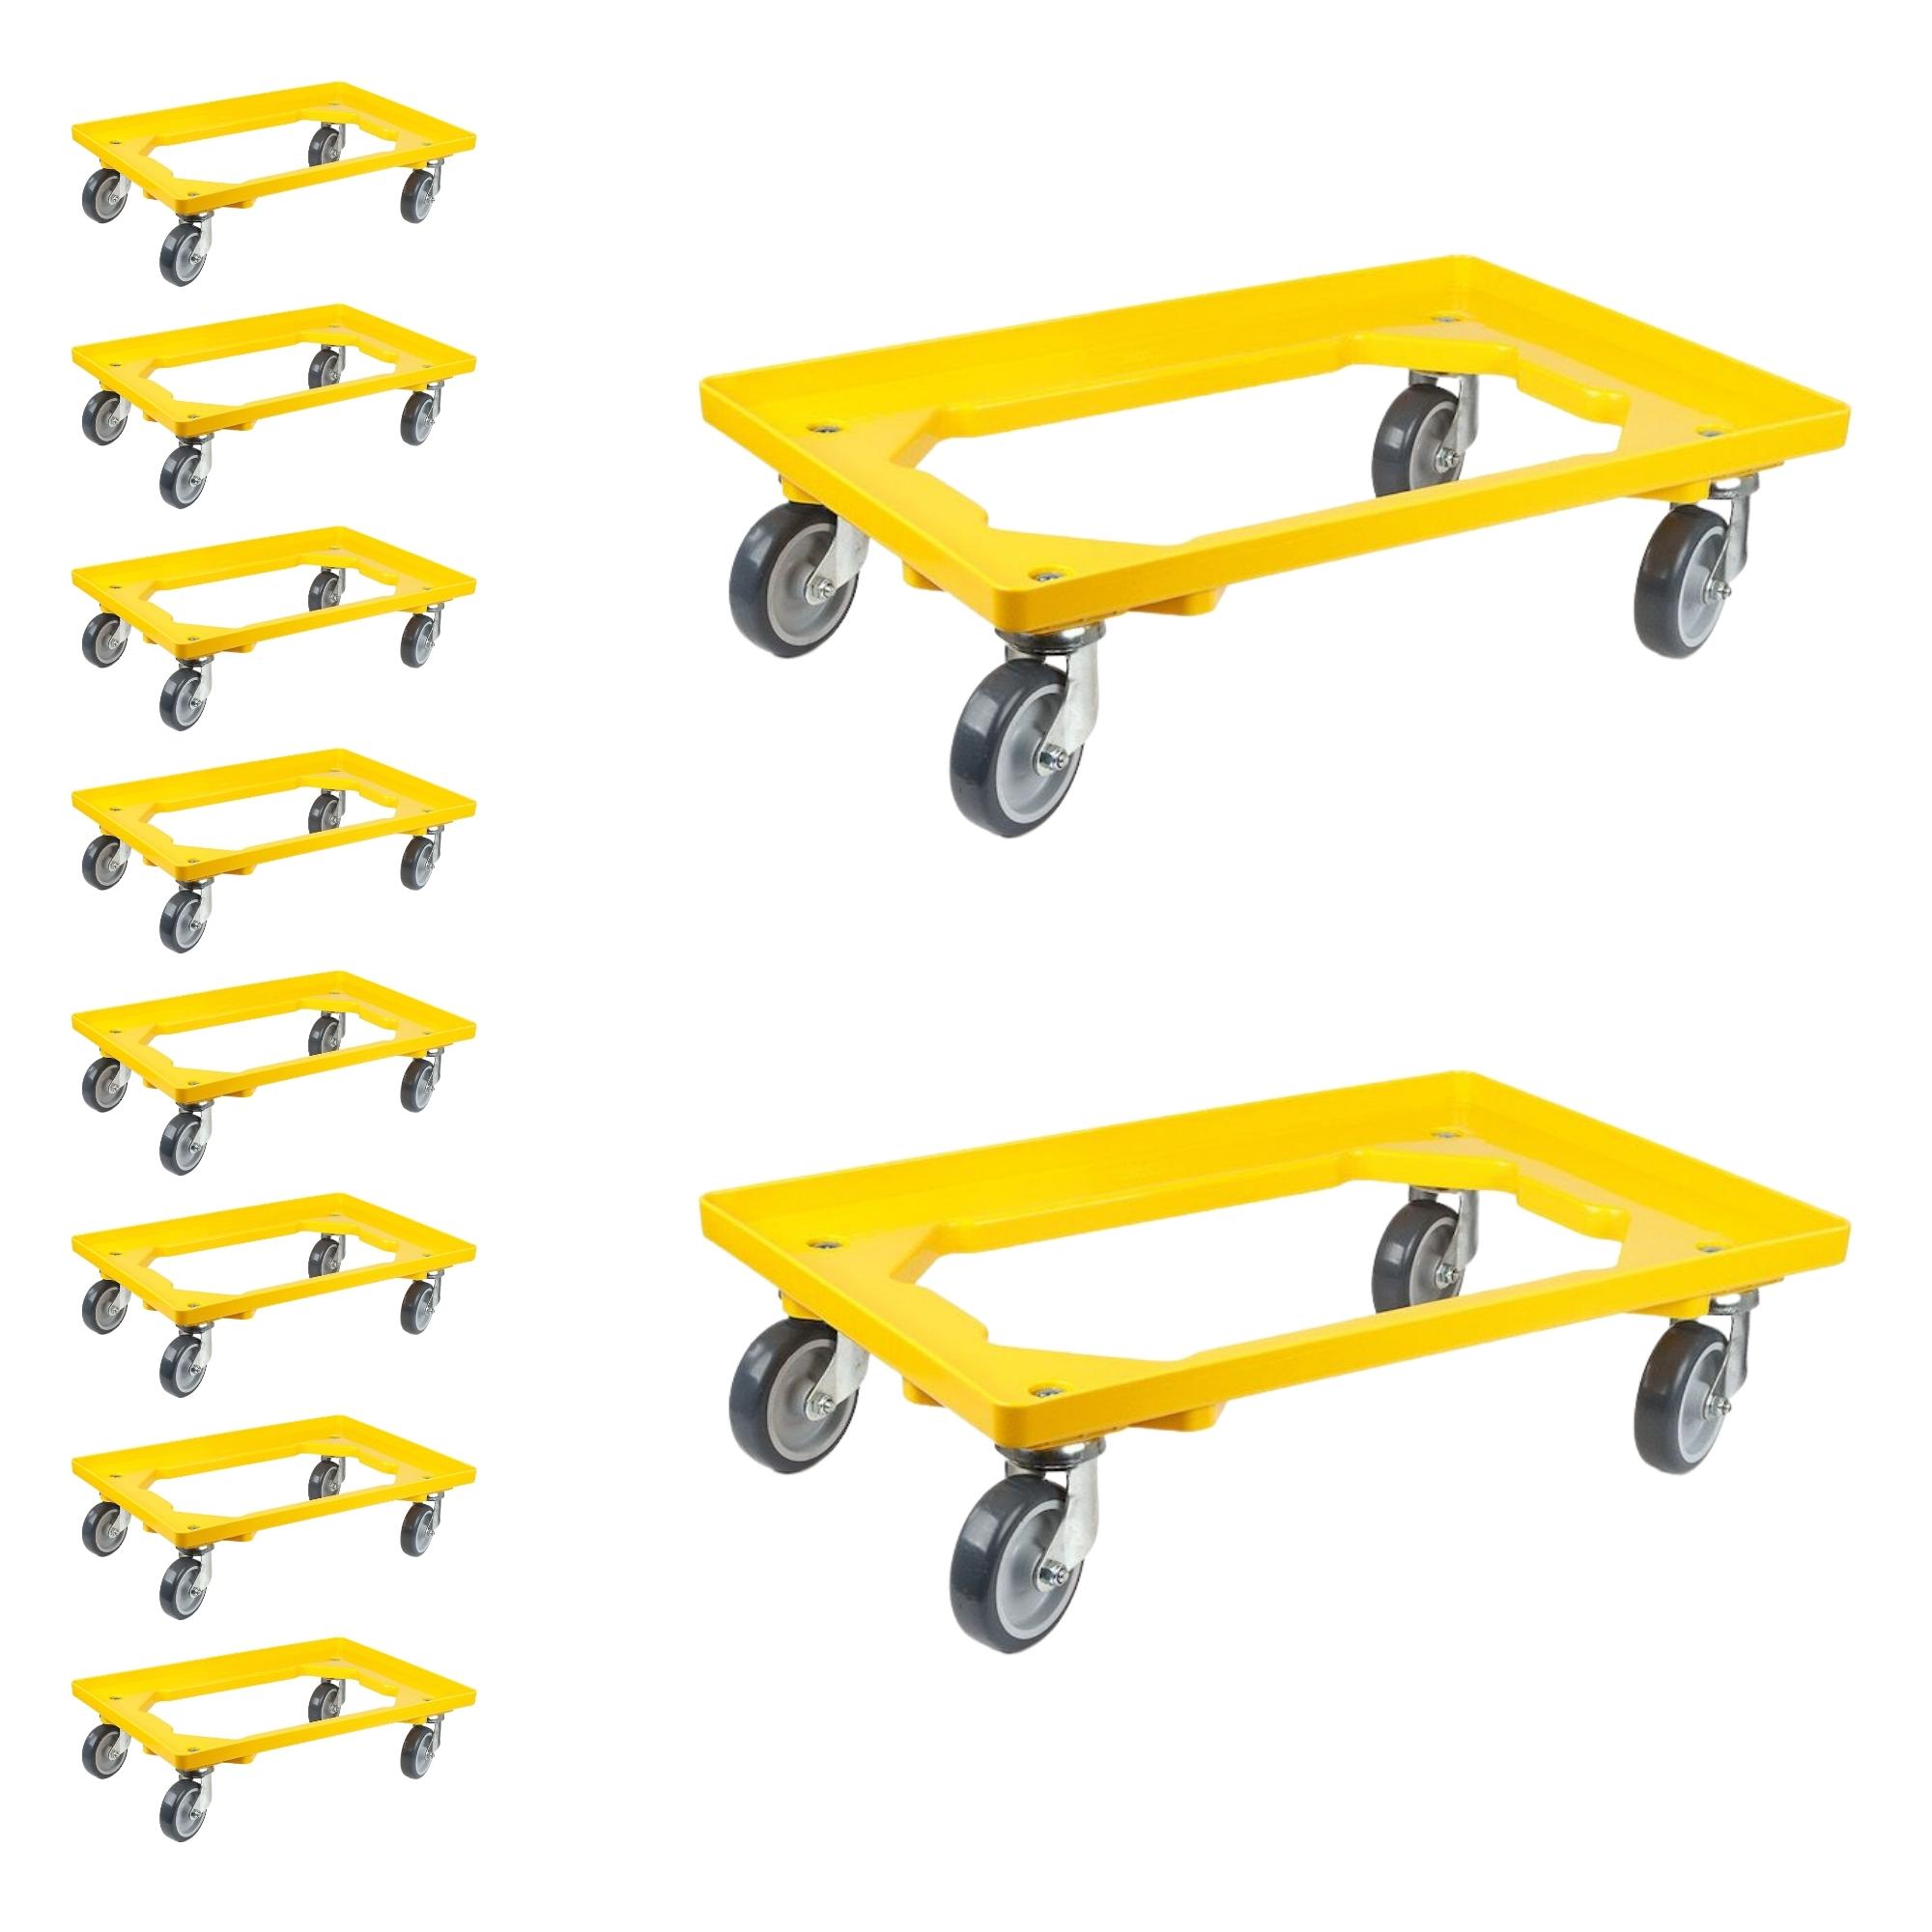 SparSet 10x Transportroller für Euroboxen 60x40cm mit Gummiräder gelb | Offenes Deck | 4 Lenkrollen | Traglast 300kg | Kistenroller Logistikroller Rollwagen Profi-Fahrgestell